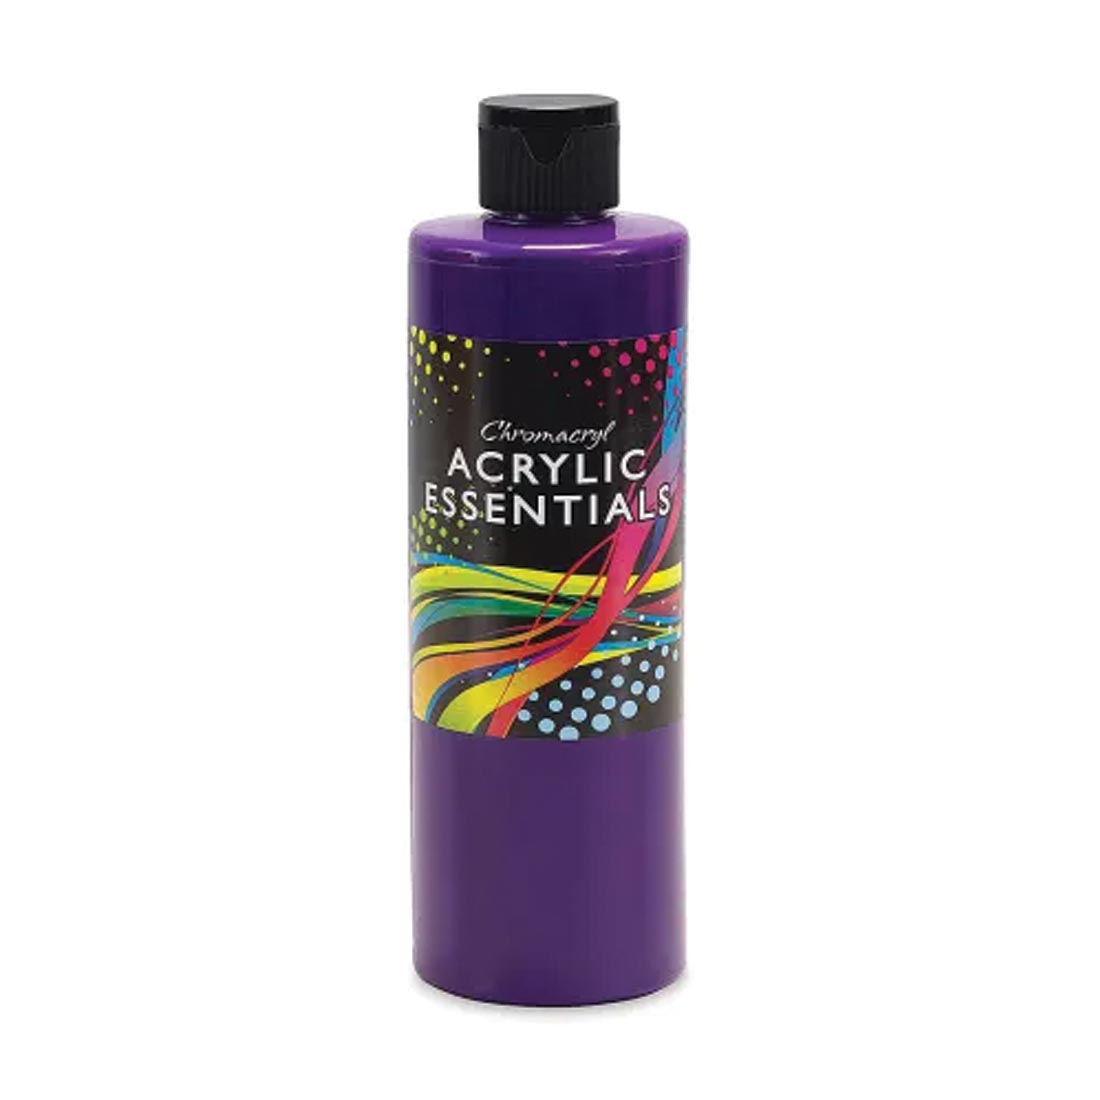 Bottle of Purple Chromacryl Acrylic Essentials Paint